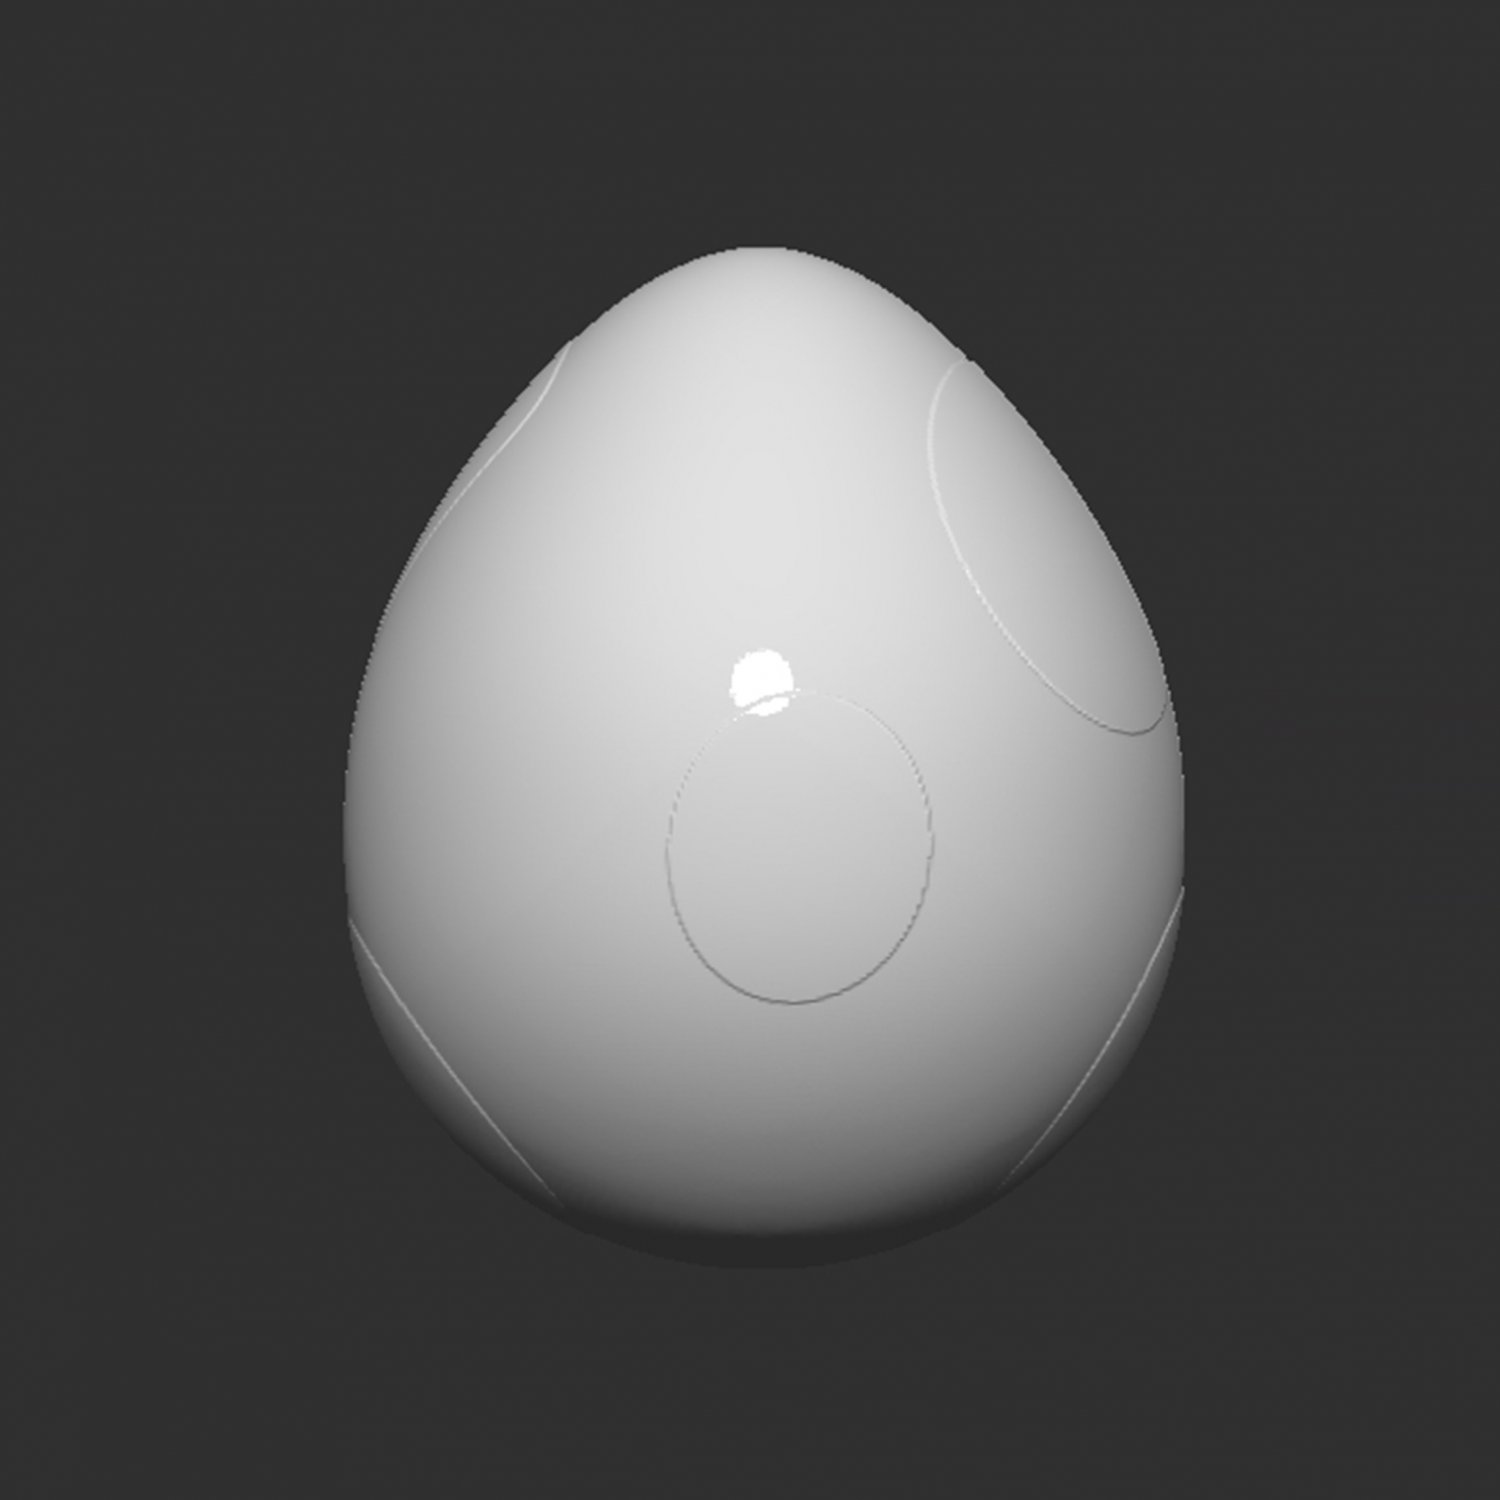 ArtStation - Yoshi Eggs